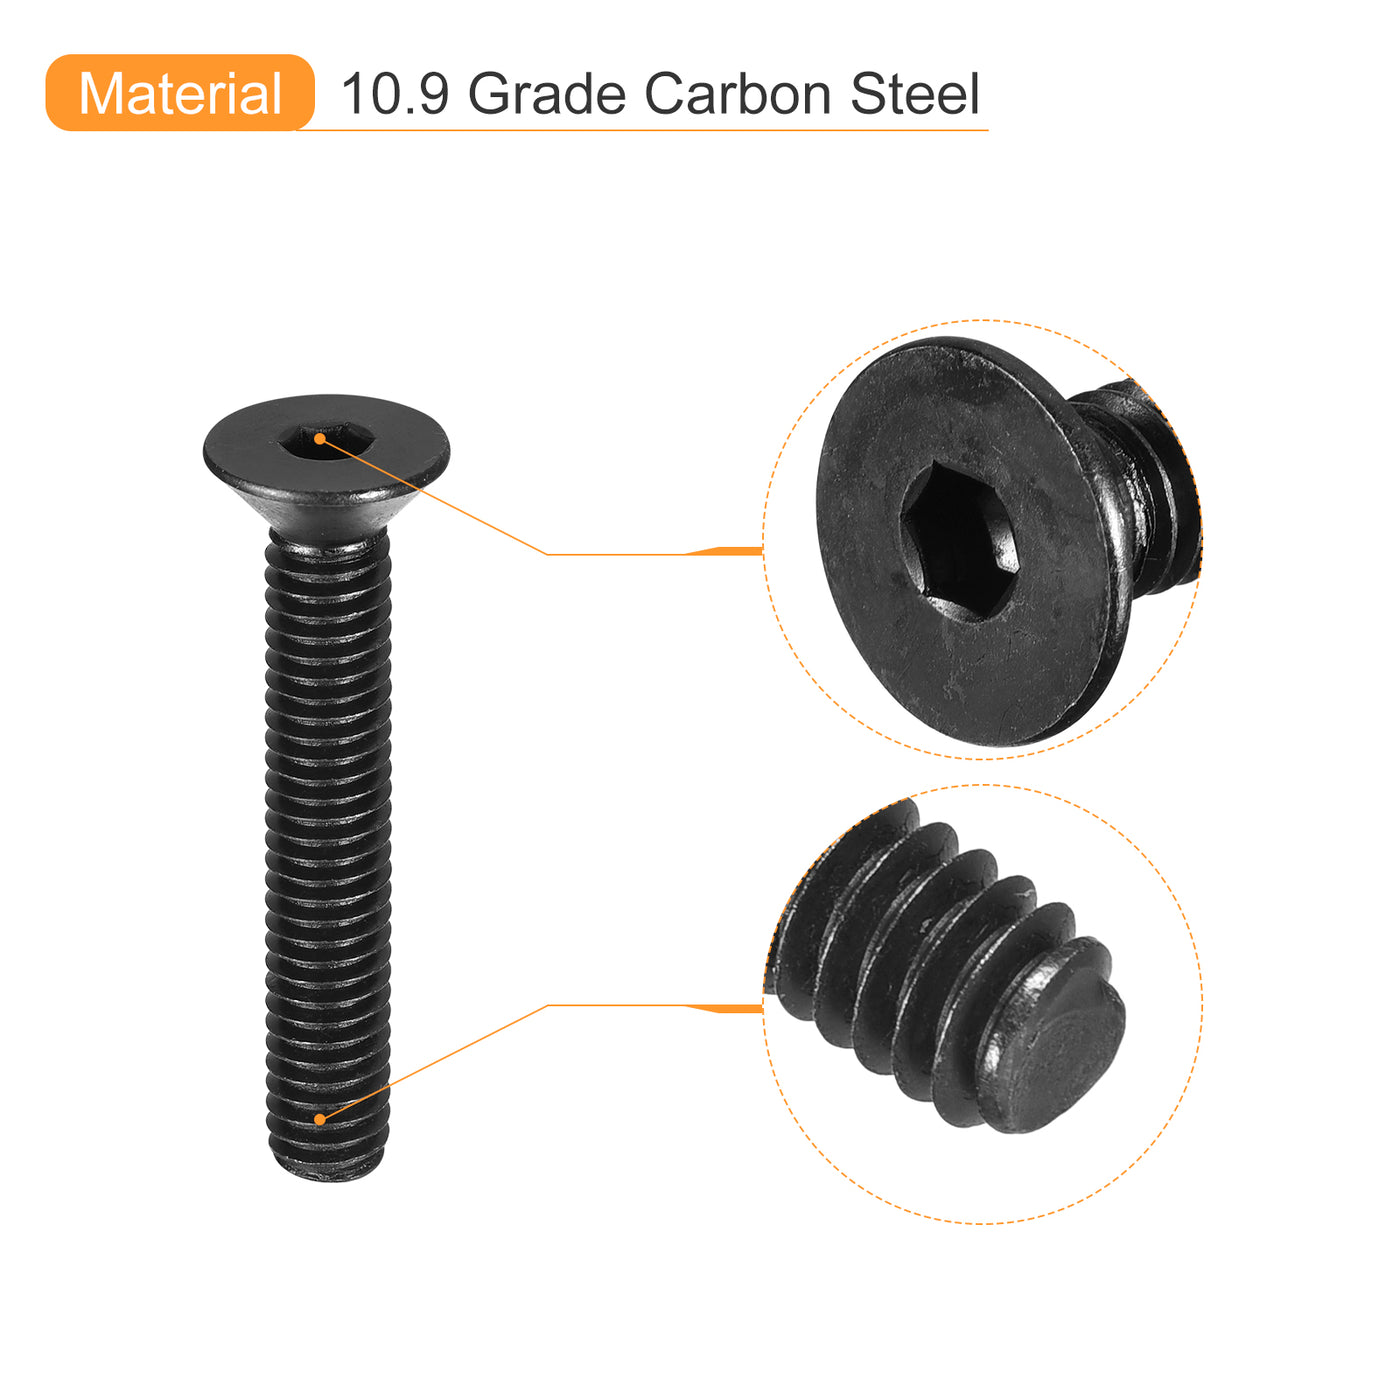 uxcell Uxcell 5/16-18x2" Flat Head Socket Cap Screws, 10.9 Grade Carbon Steel, 10PCS